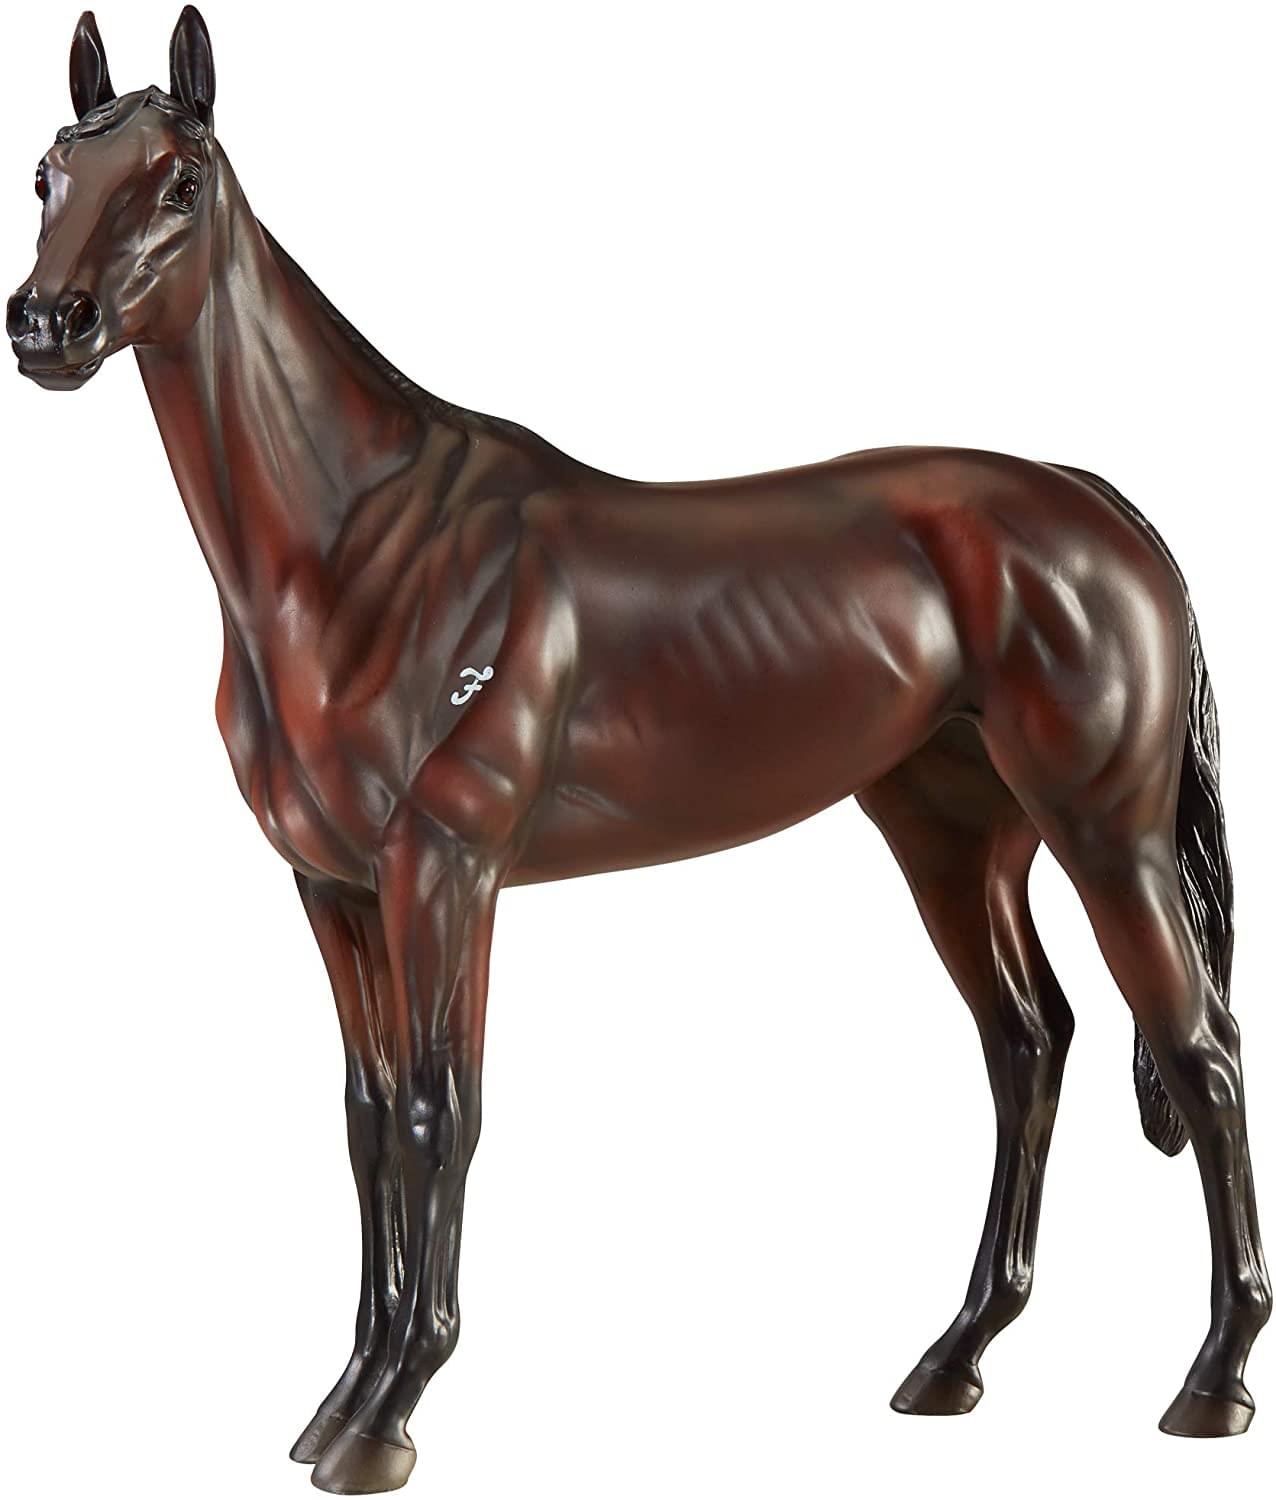 Breyer Traditional 1:9 Scale Model Horse | Winx Australian Racehorse